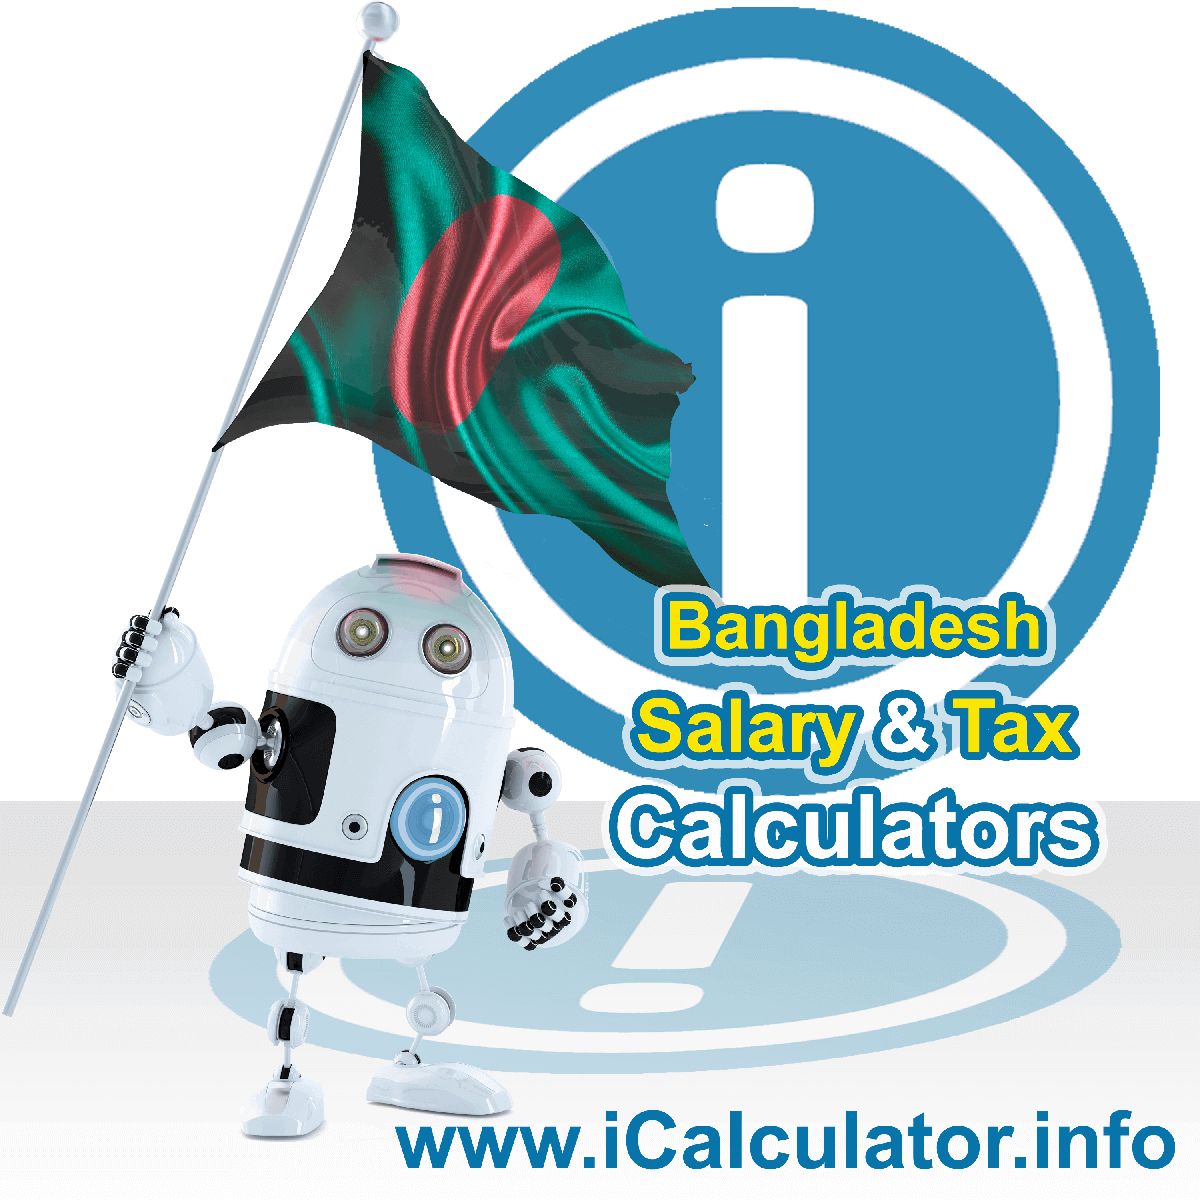 Bangladesh Salary Calculator. This image shows the Bangladeshese flag and information relating to the tax formula for the Bangladesh Tax Calculator